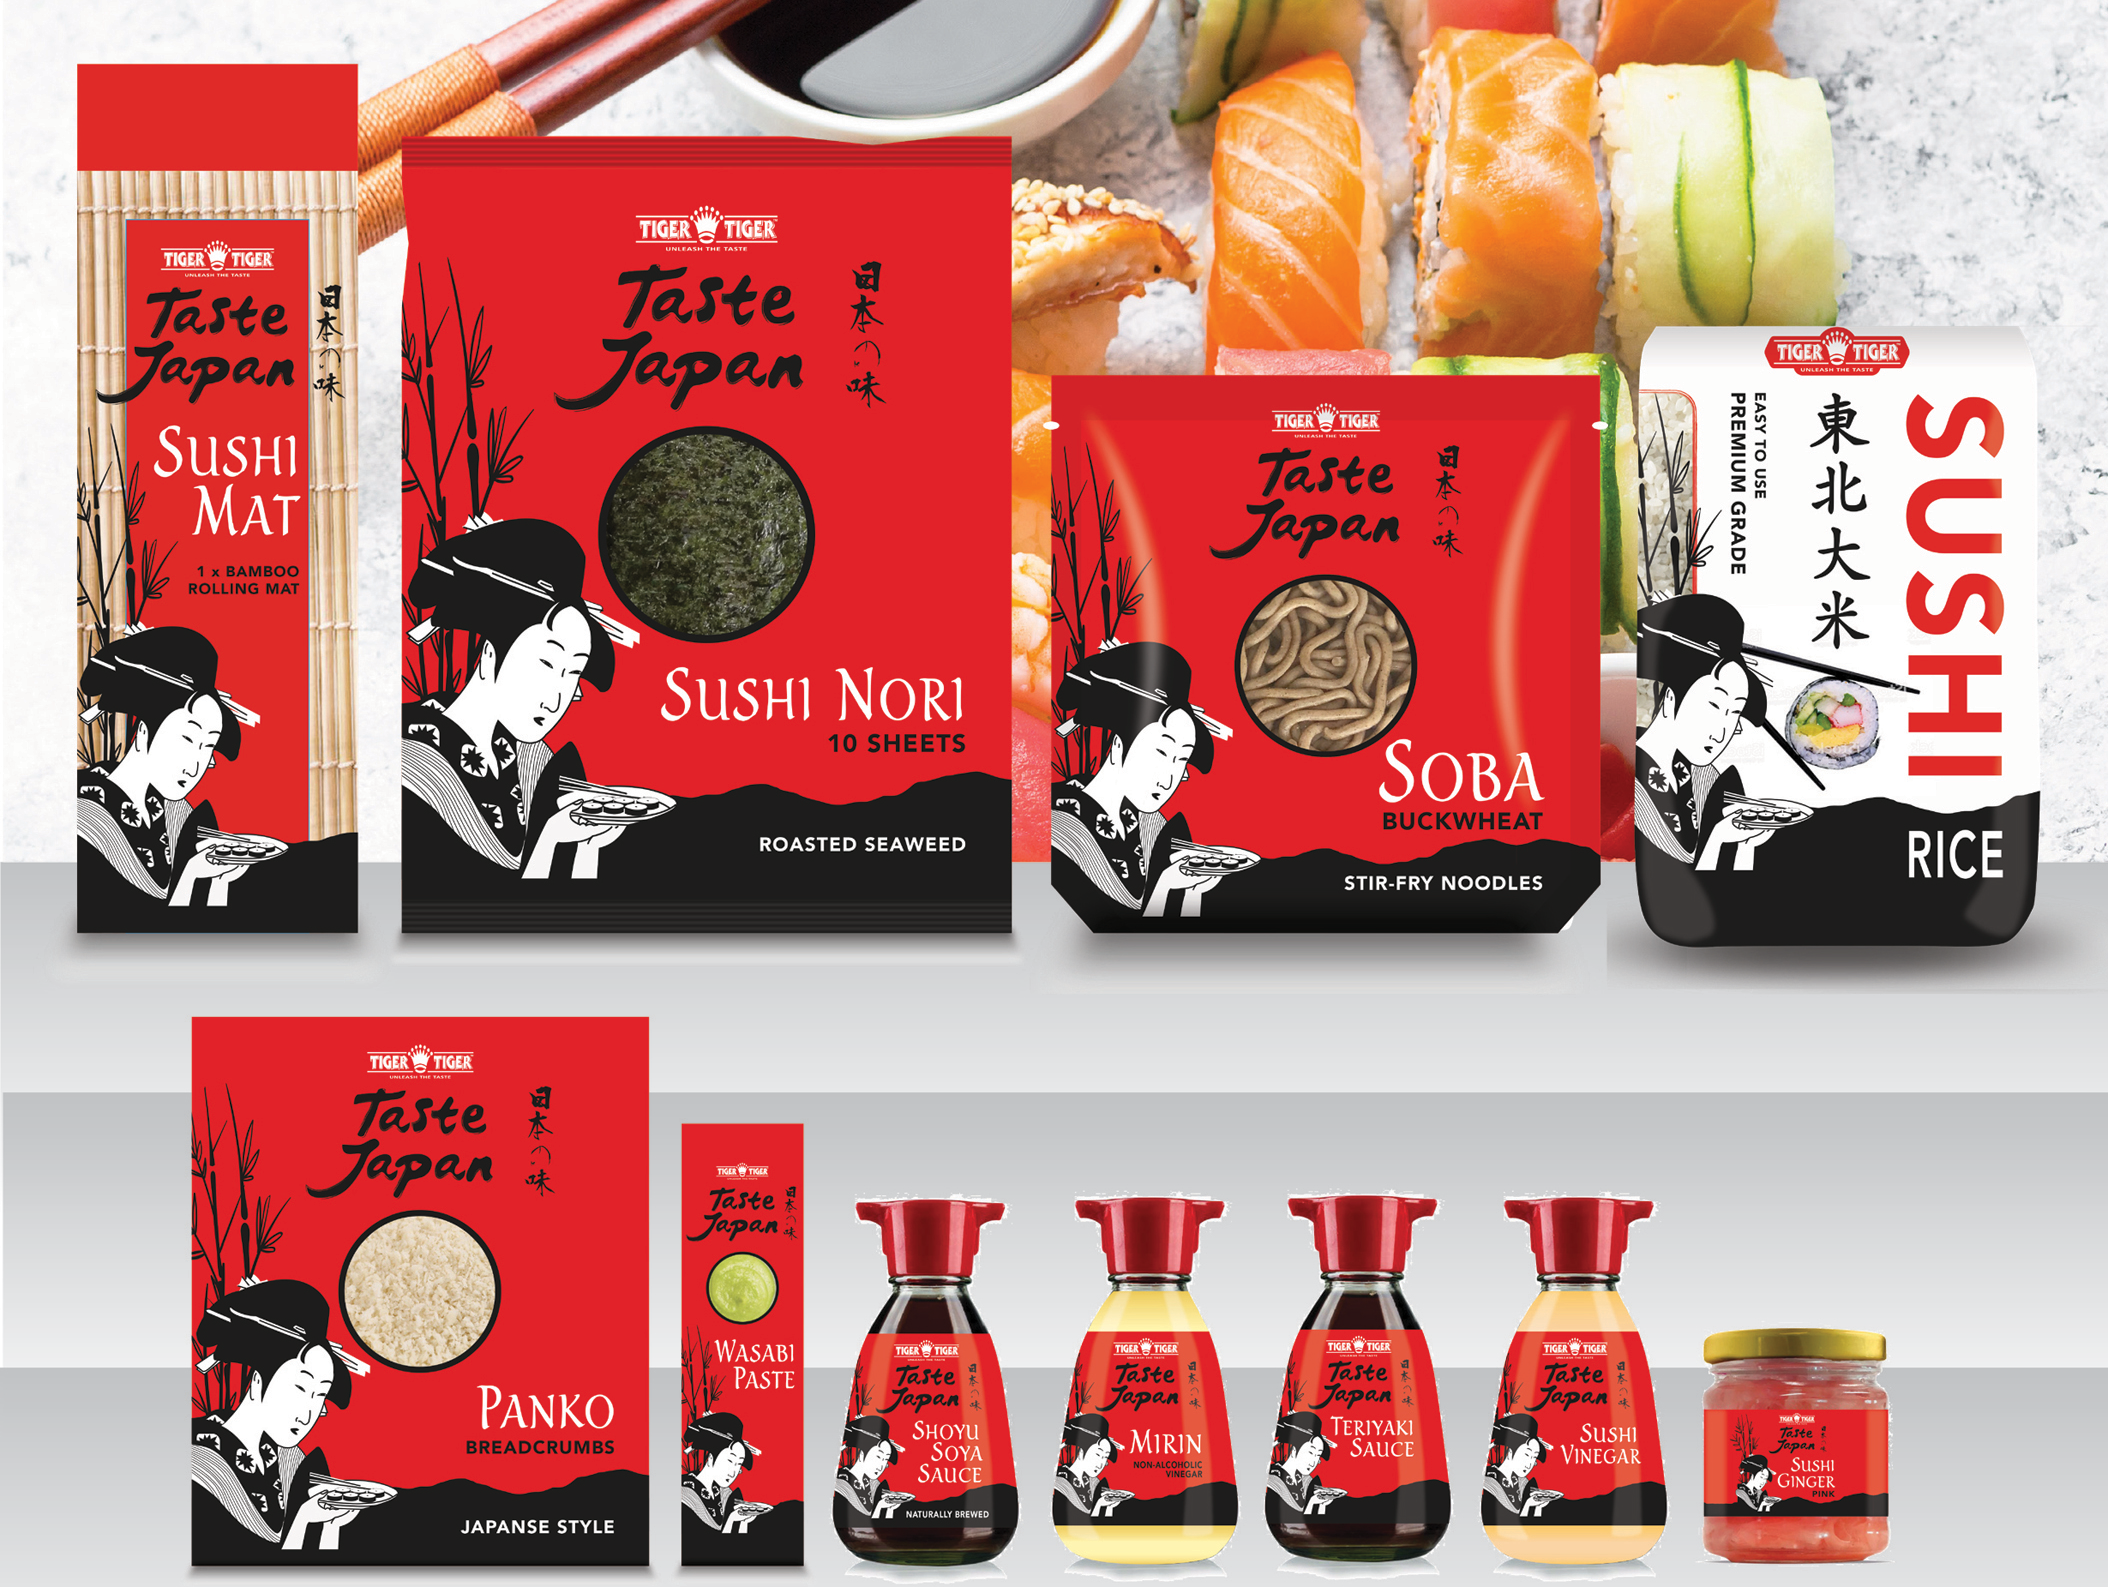 New Taste Japan Range from Tiger Tiger